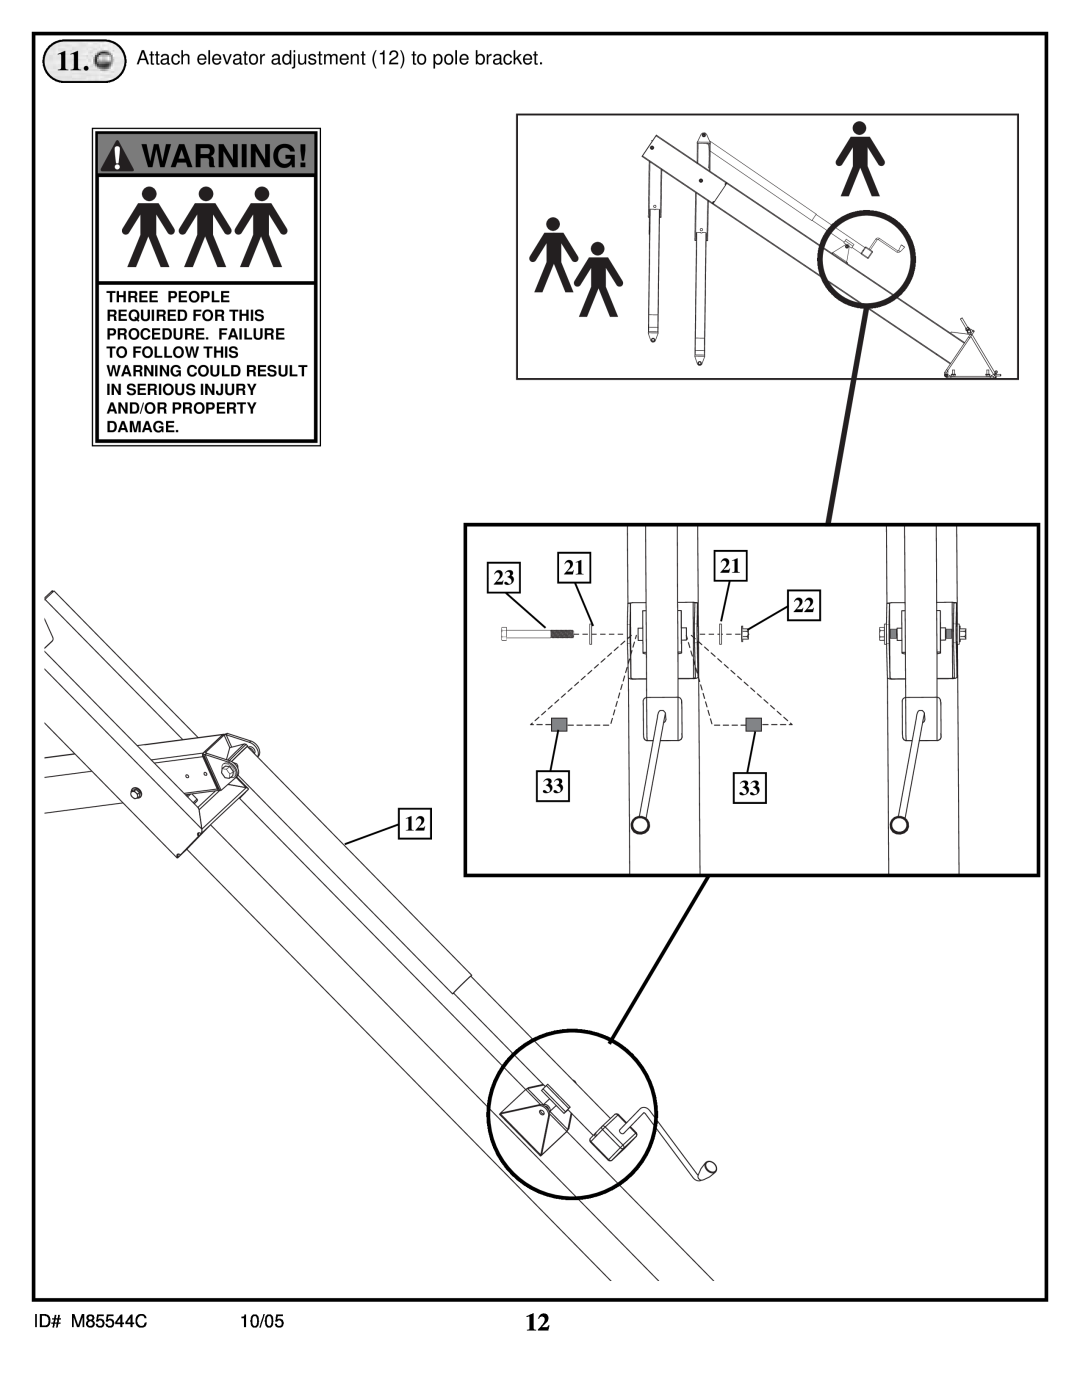 Spalding manual Attach elevator adjustment 12 to pole bracket, ID# M85544C, 10/05 